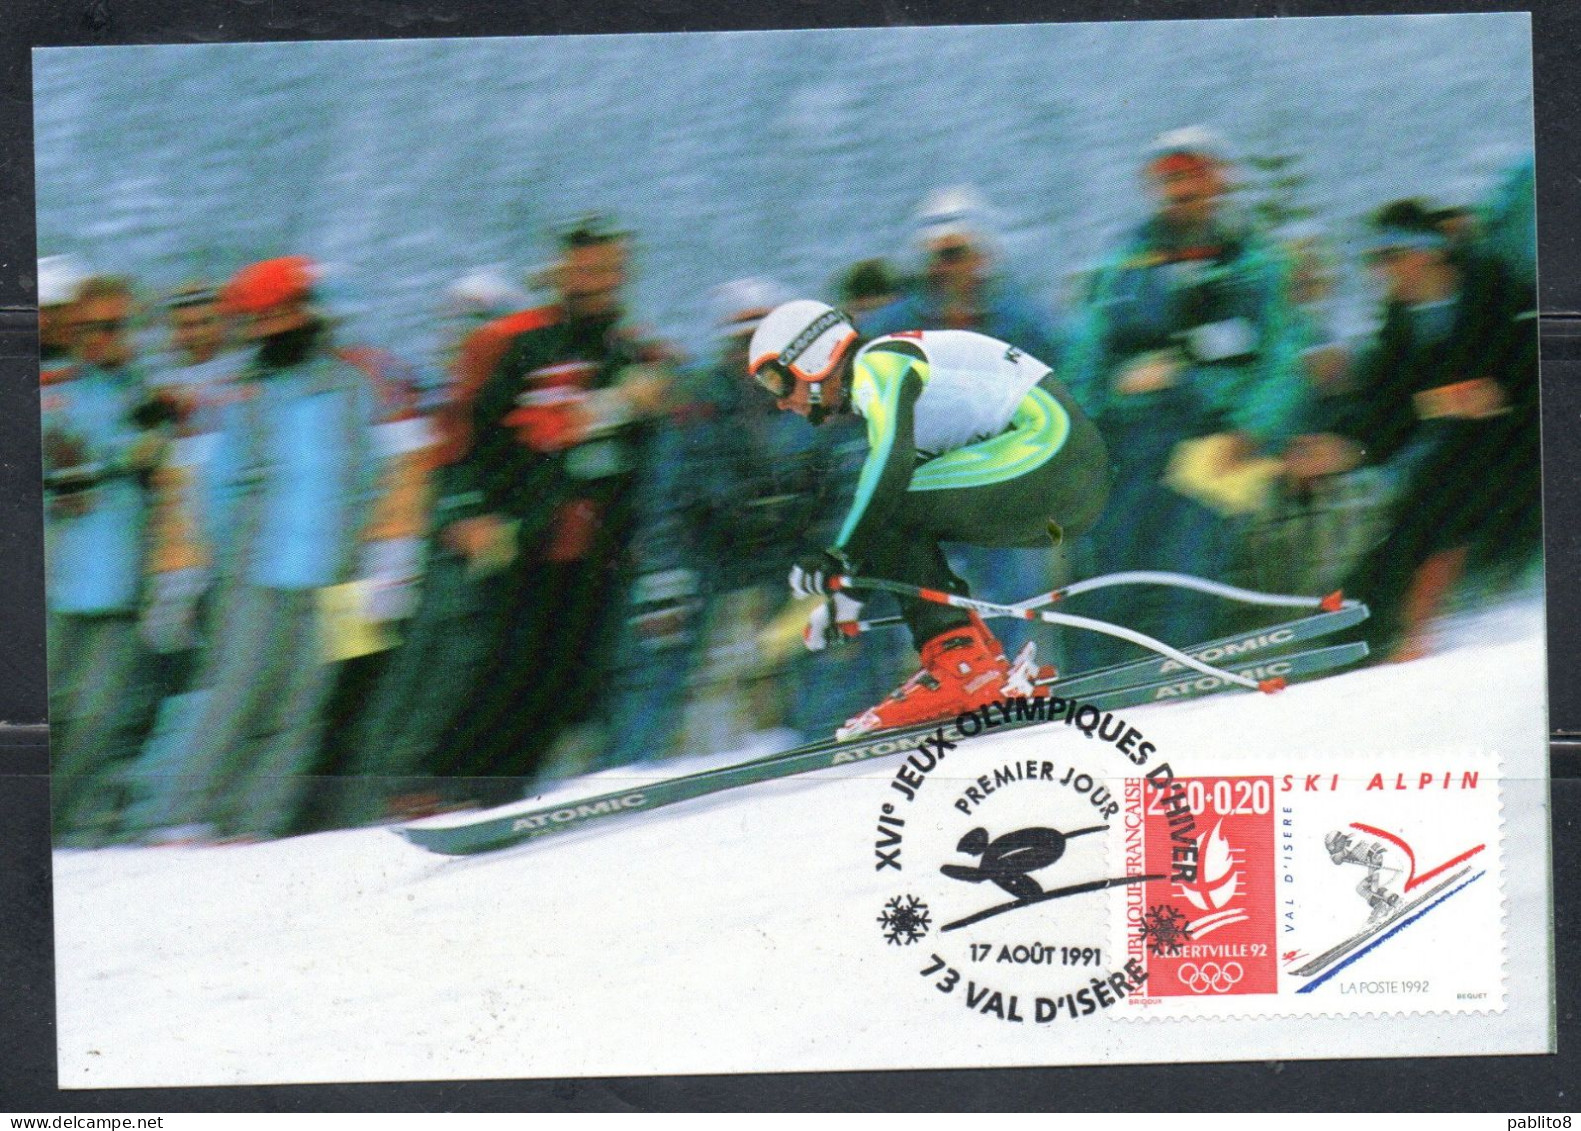 FRANCE FRANCIA 1990 1991 OLYMPIC GAMES JEUX OLYMPIQUES ALBERTVILLE SKI ALPIN 2.50fr+20c MAXI MAXIMUM CARD CARTE - 1990-1999